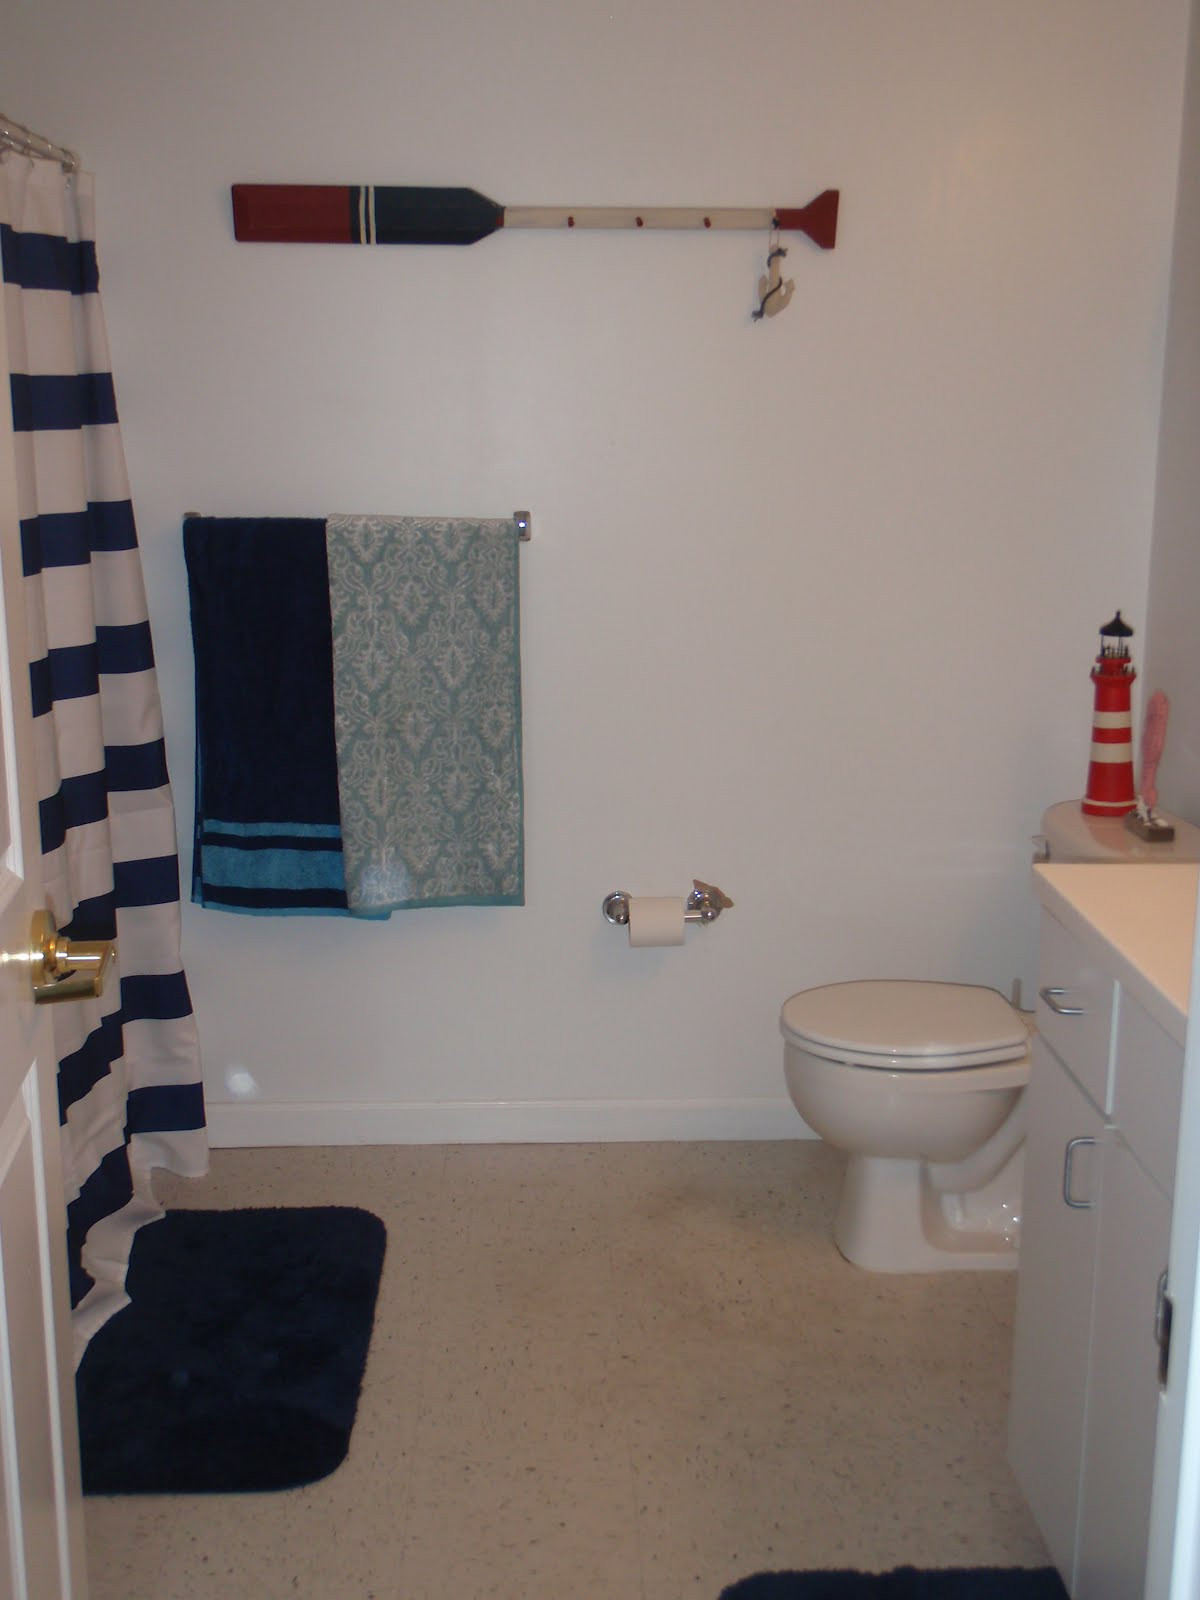 Anchor Decor For Bathroom
 85 Ideas about Nautical Bathroom Decor TheyDesign